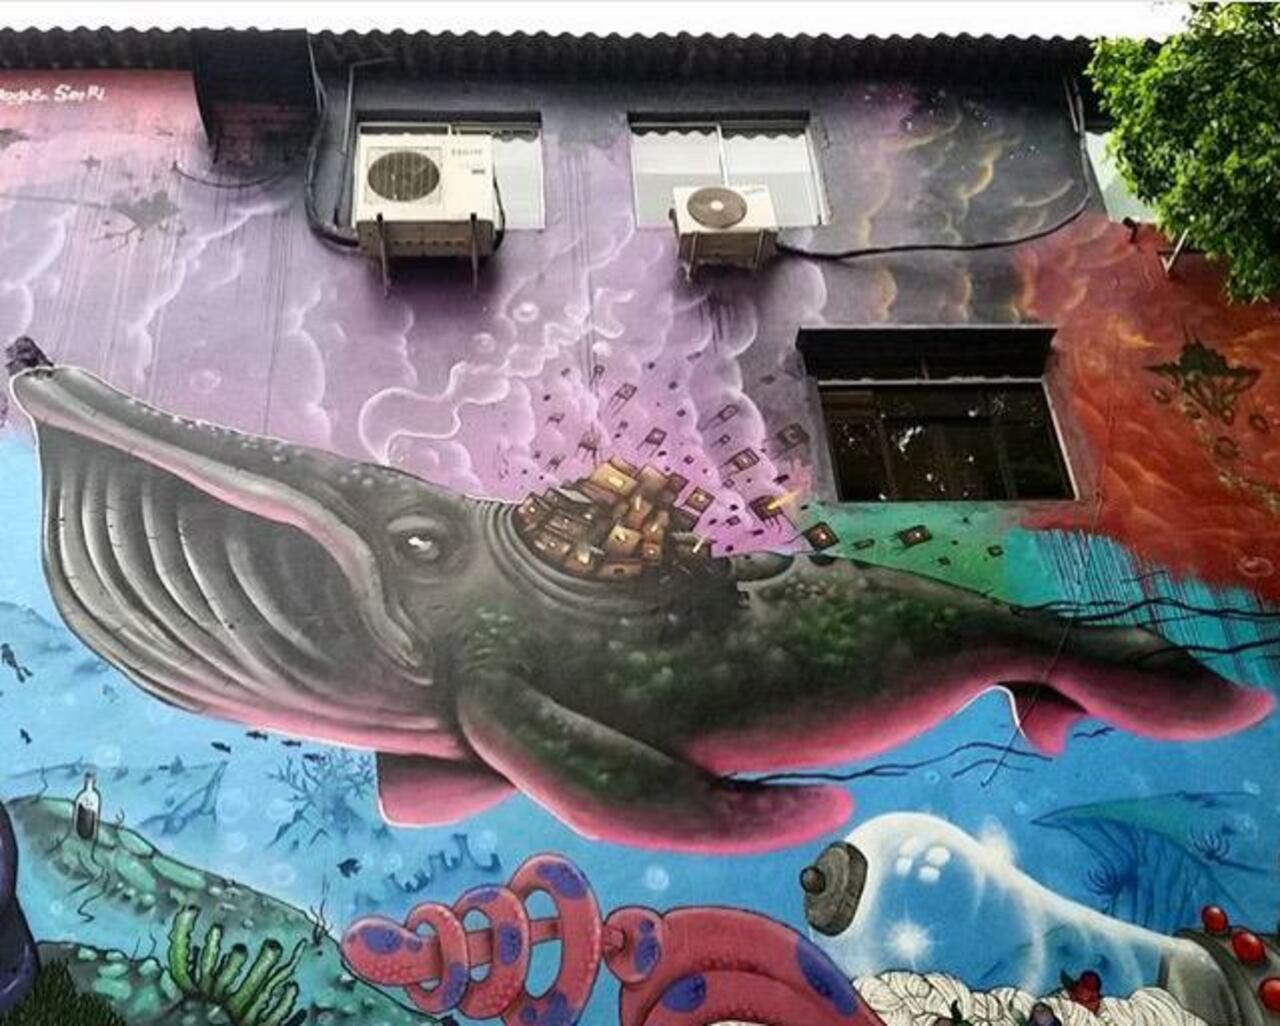 Street Art by joks_johnes Pinheiros, São Paulo 

#art #mural #graffiti #streetart http://t.co/X8M1Zse67A